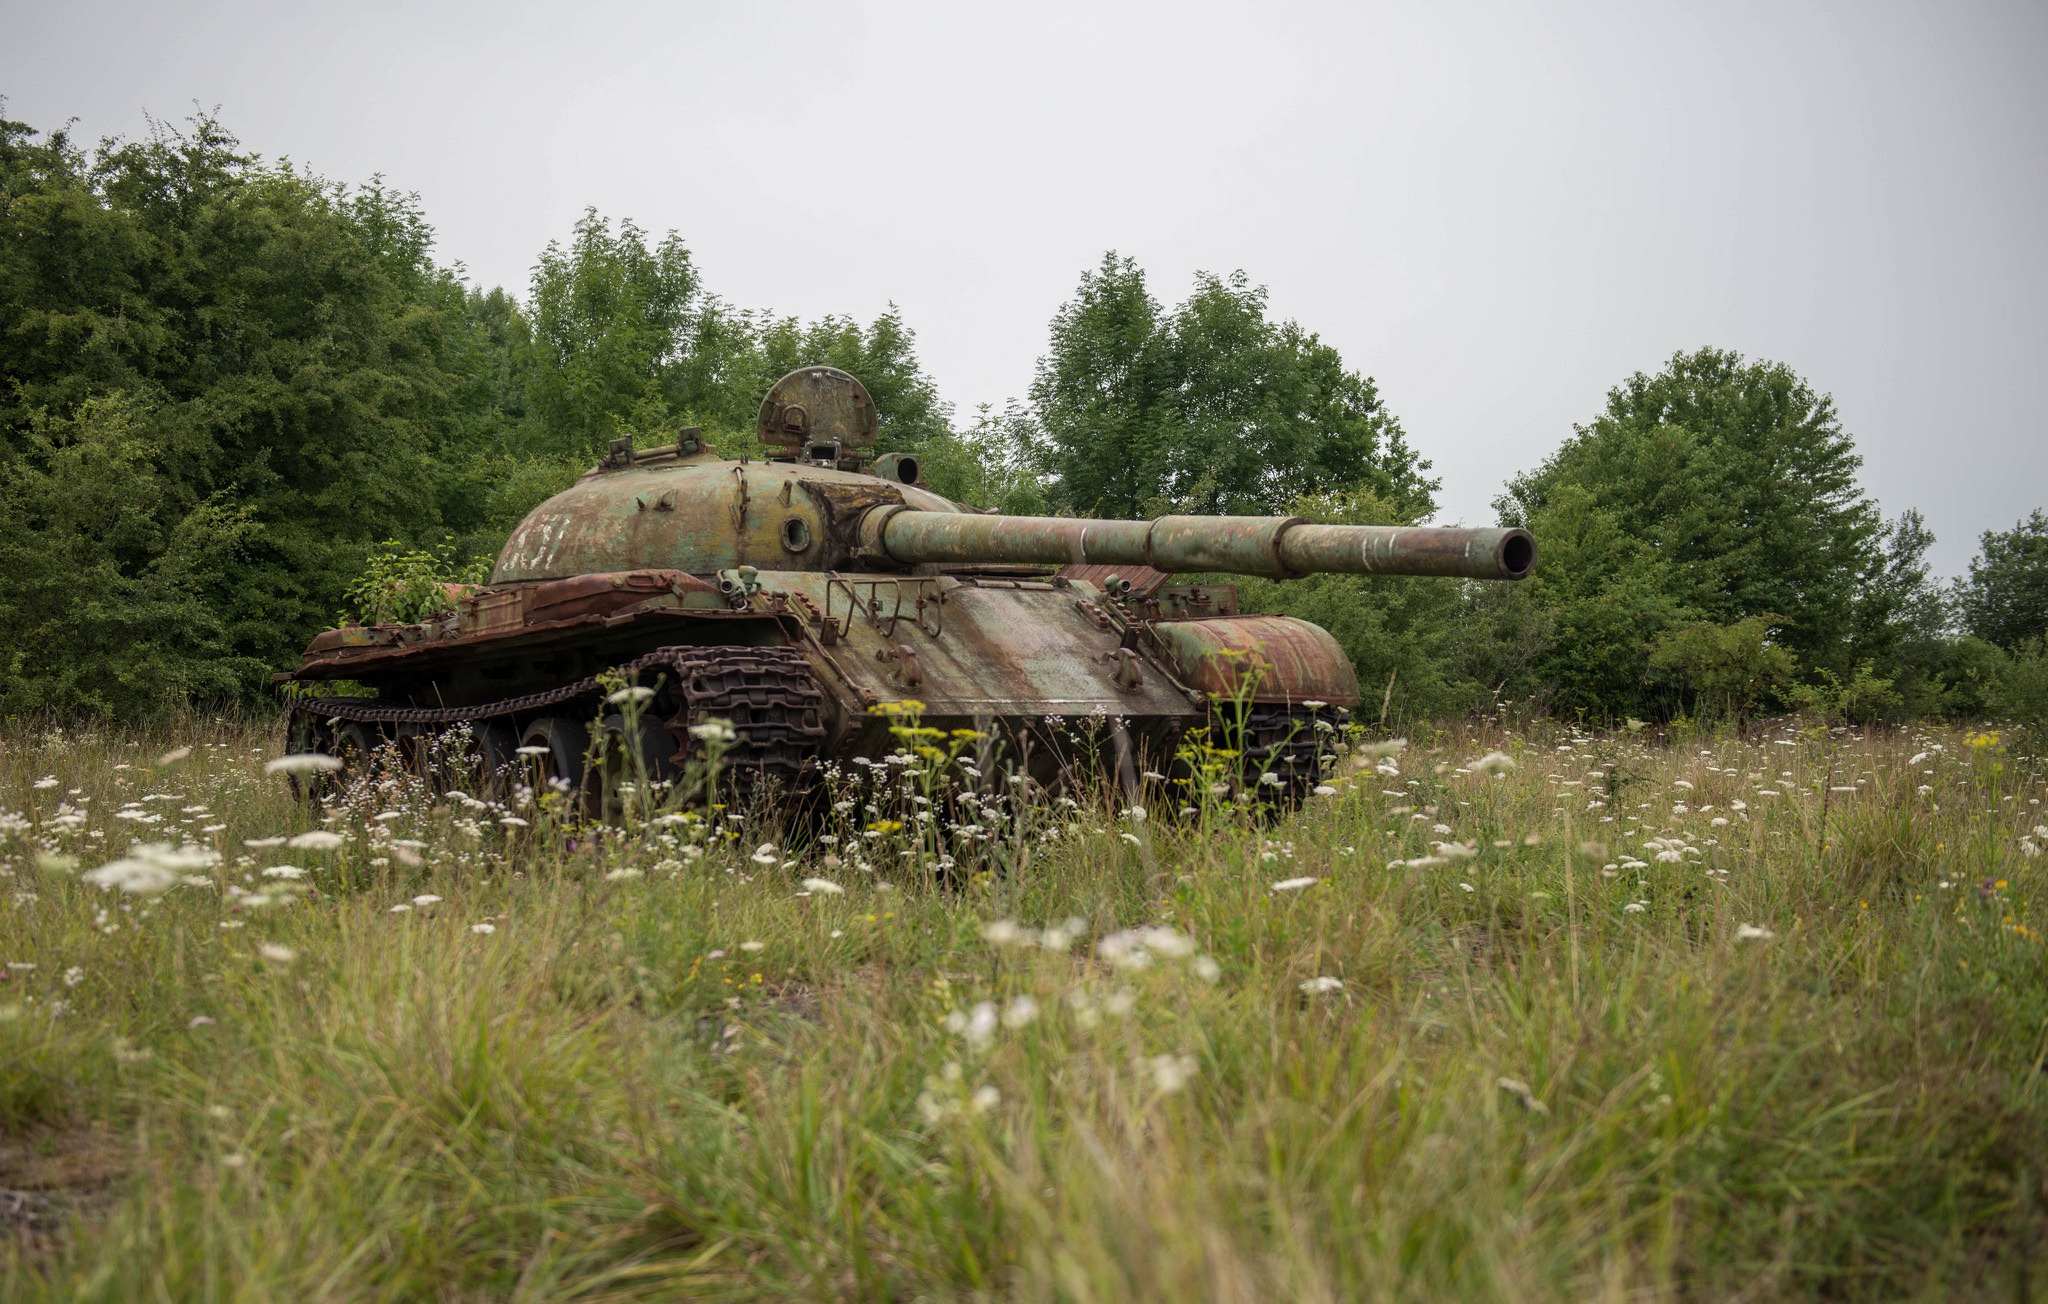 General 2048x1304 tank grass wreck military old vehicle T-62 Russian/Soviet tanks